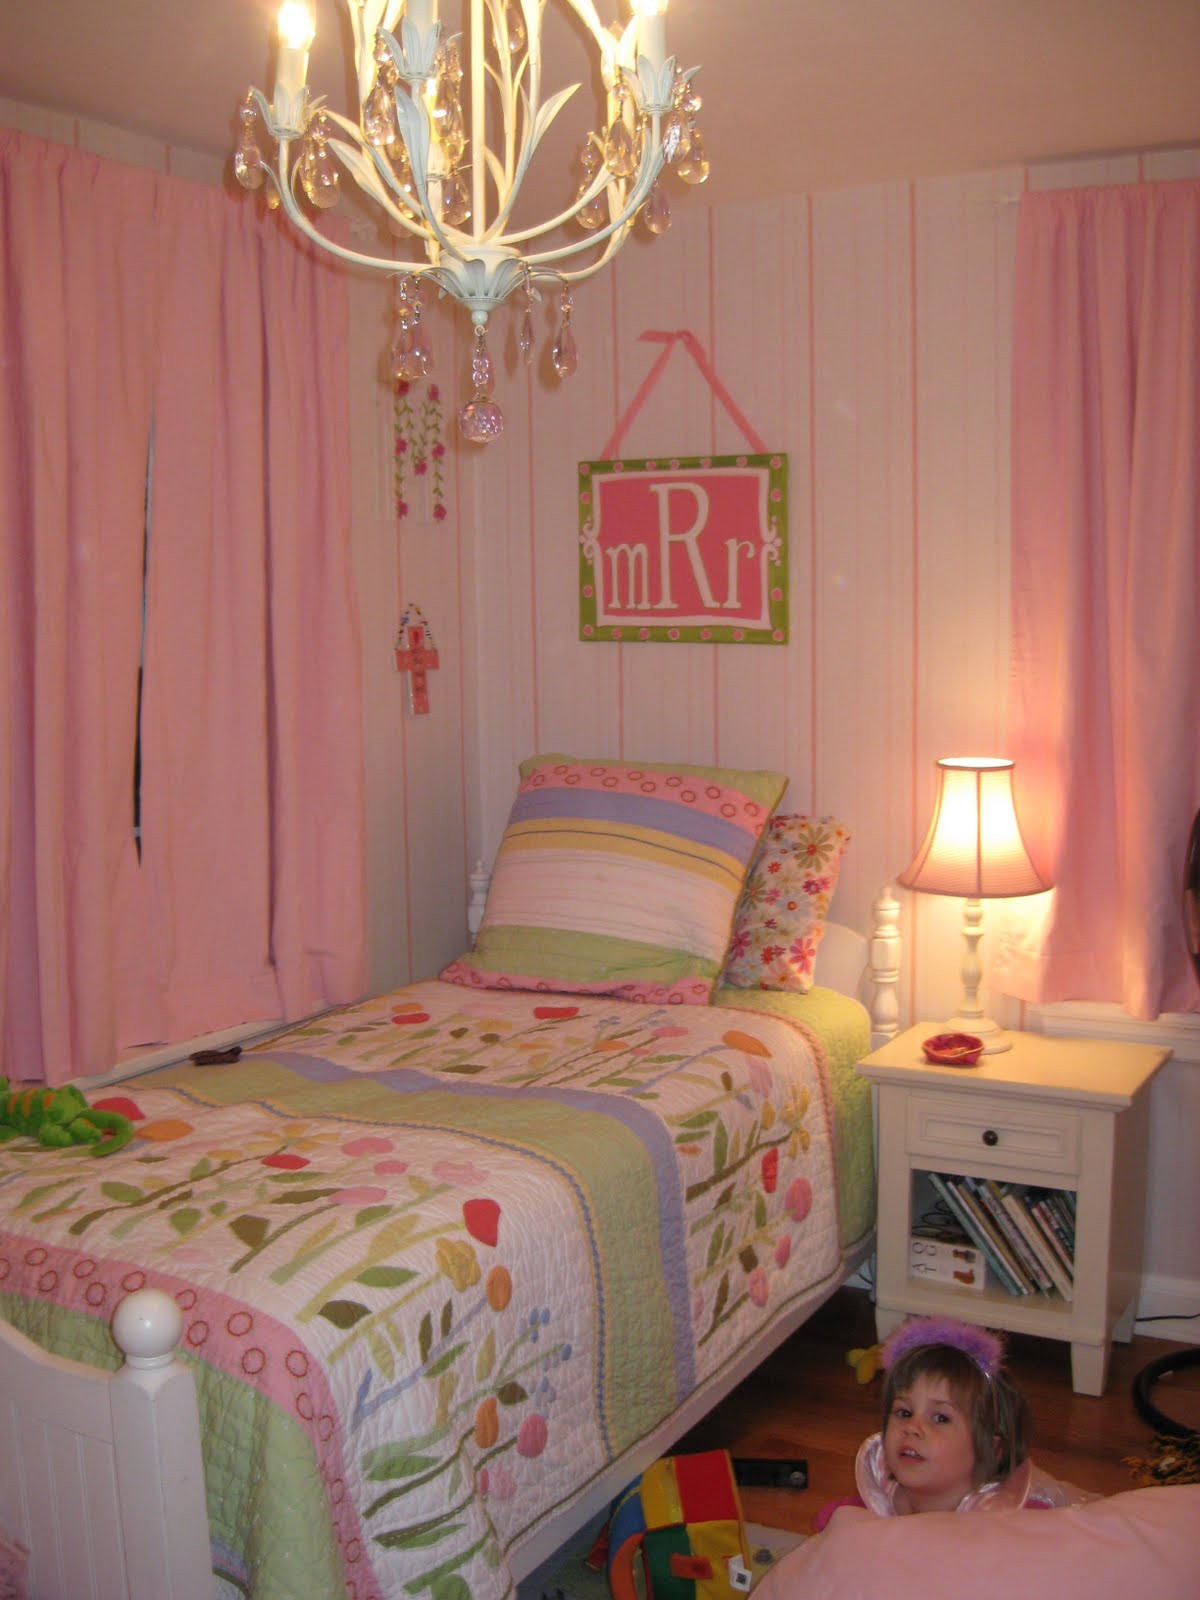 Chandelier For Girl Bedroom
 The Life of Rileys The Girls Room in progress